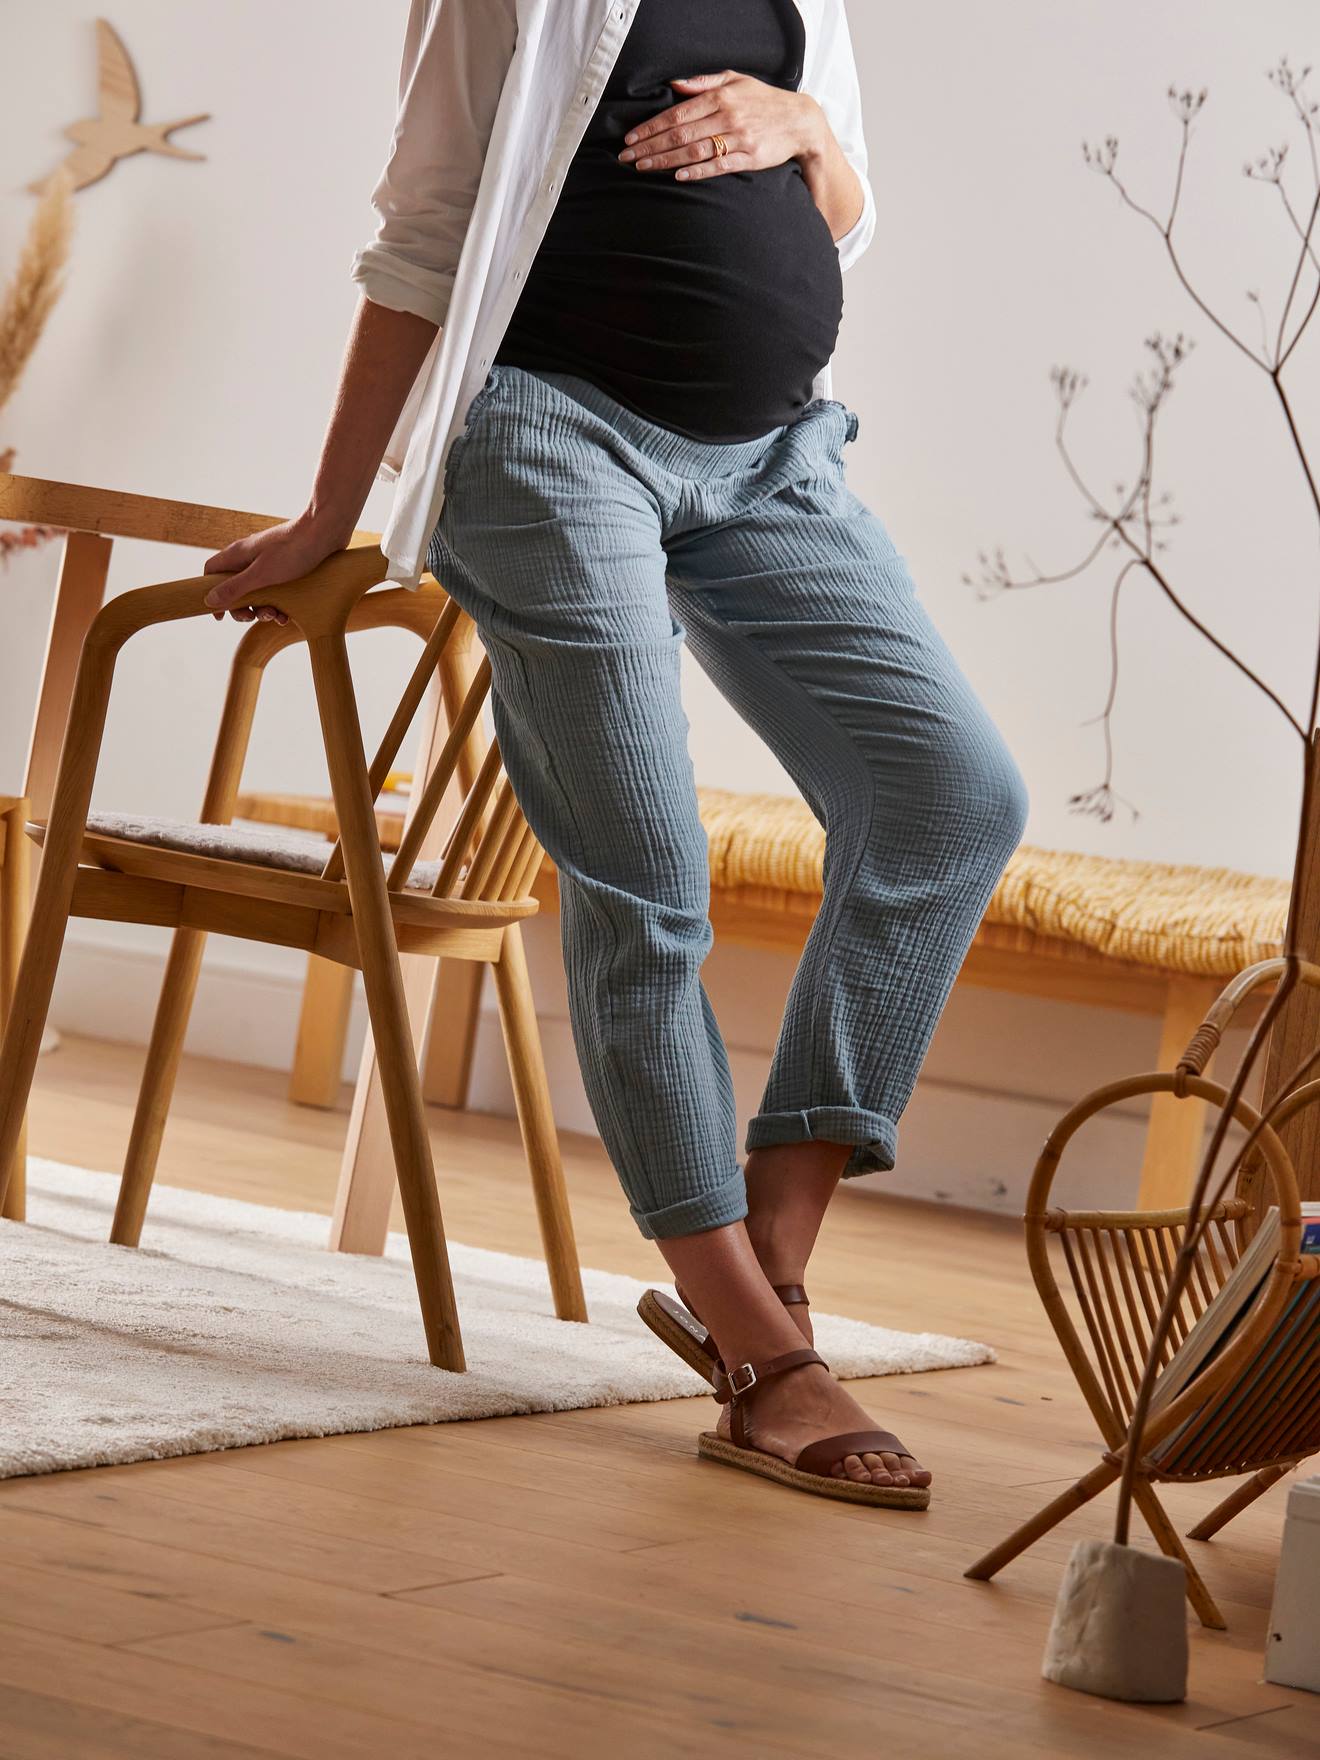 Emily Ratajkowski Says Yes to LowRise Maternity Jeans  Vogue